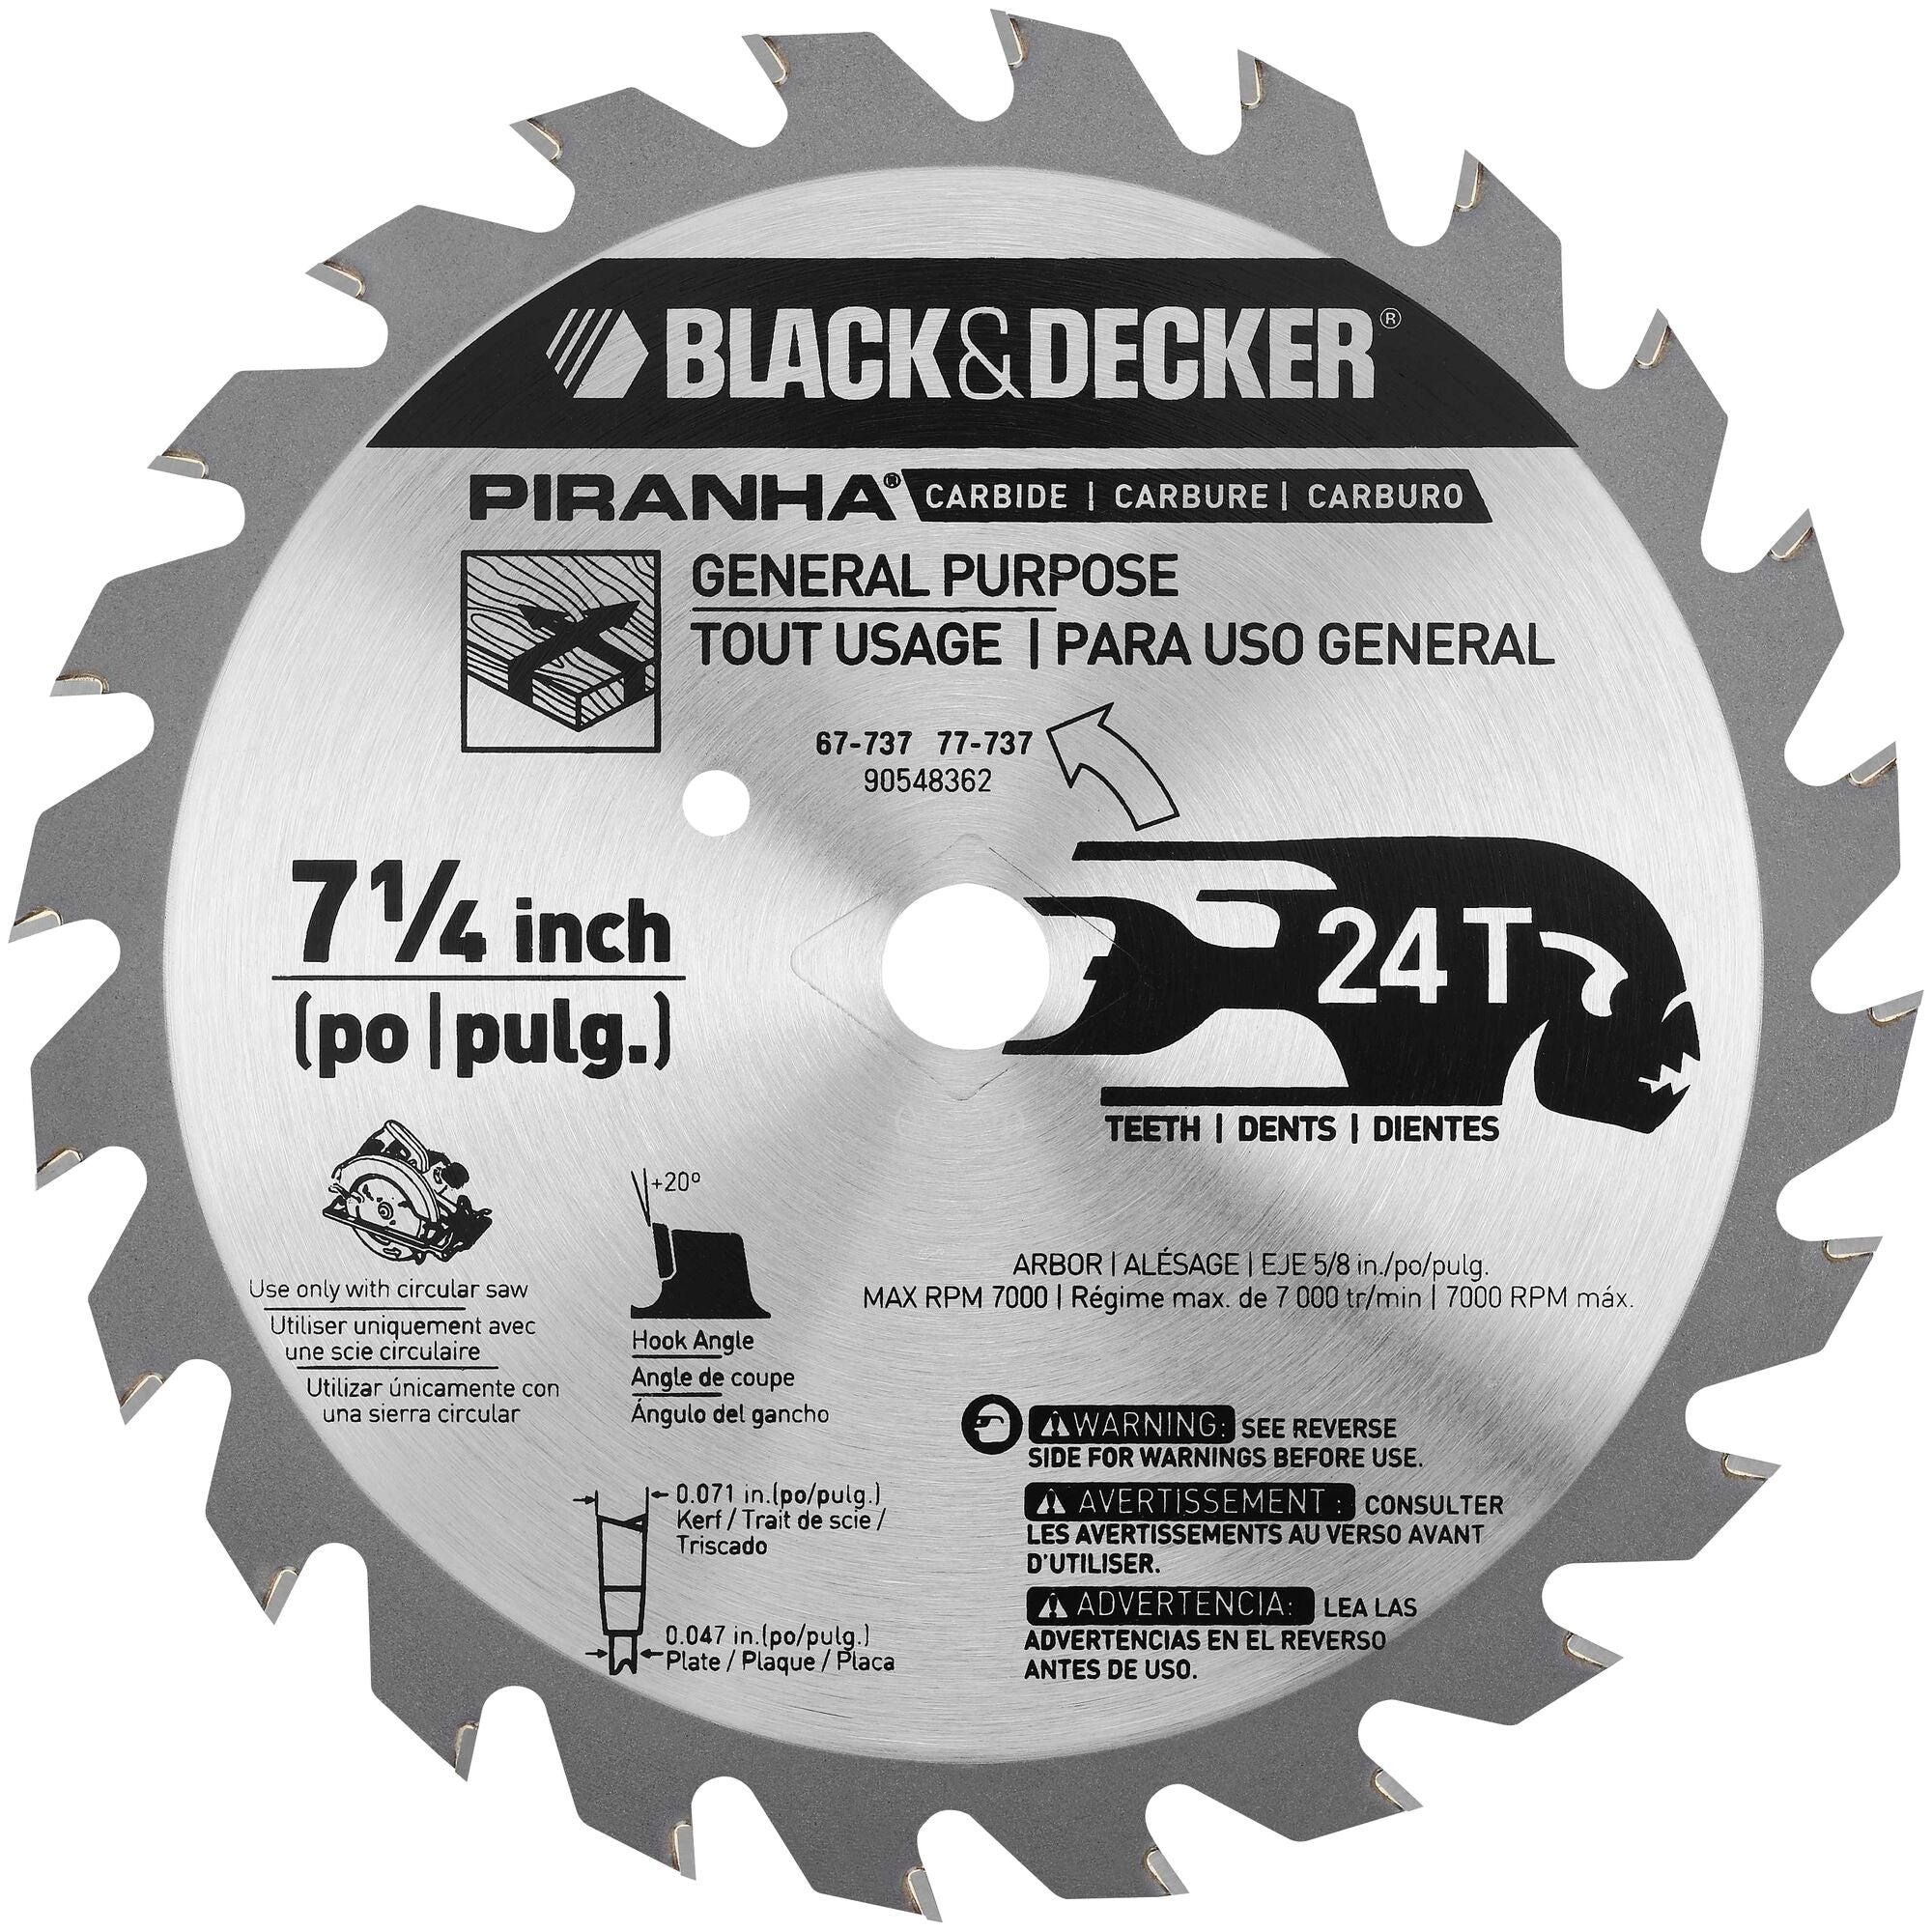 Black & Decker Piranha Circular Saw Blade 77-717 - 7 1/4 in Diameter -  Carbide